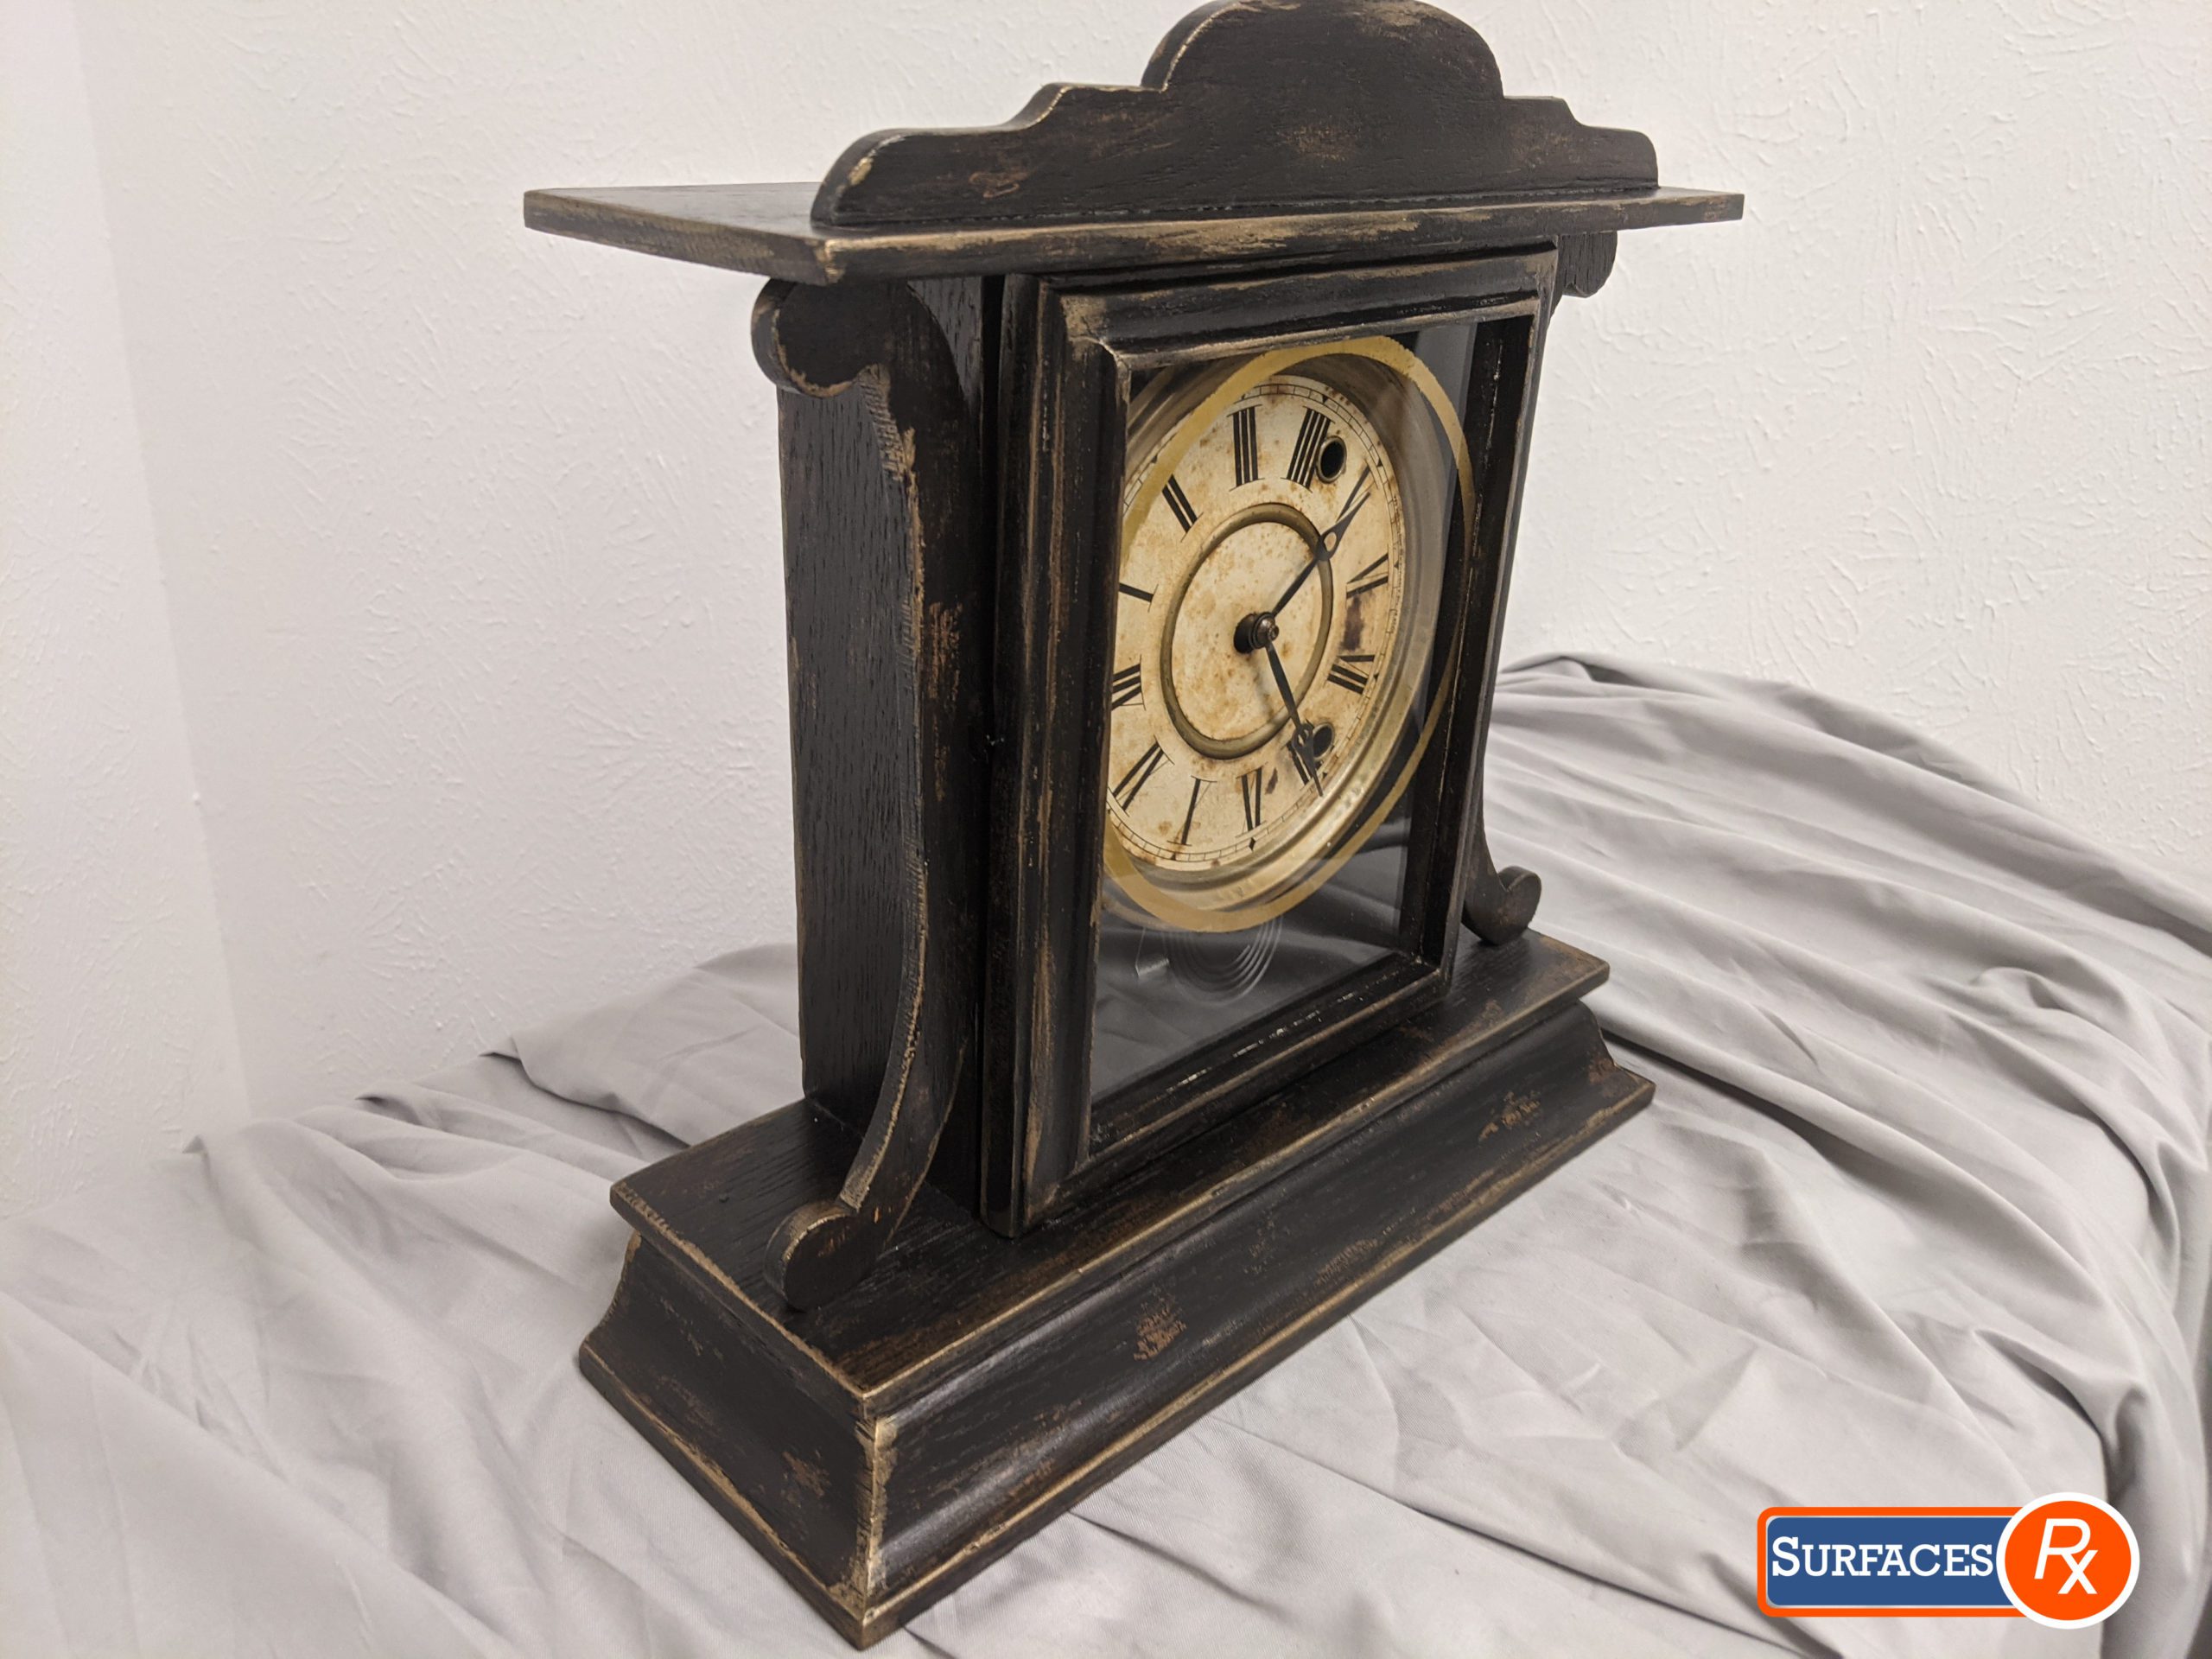 After Surfaces Rx Vintage Mantel Clock Faux Refinishing